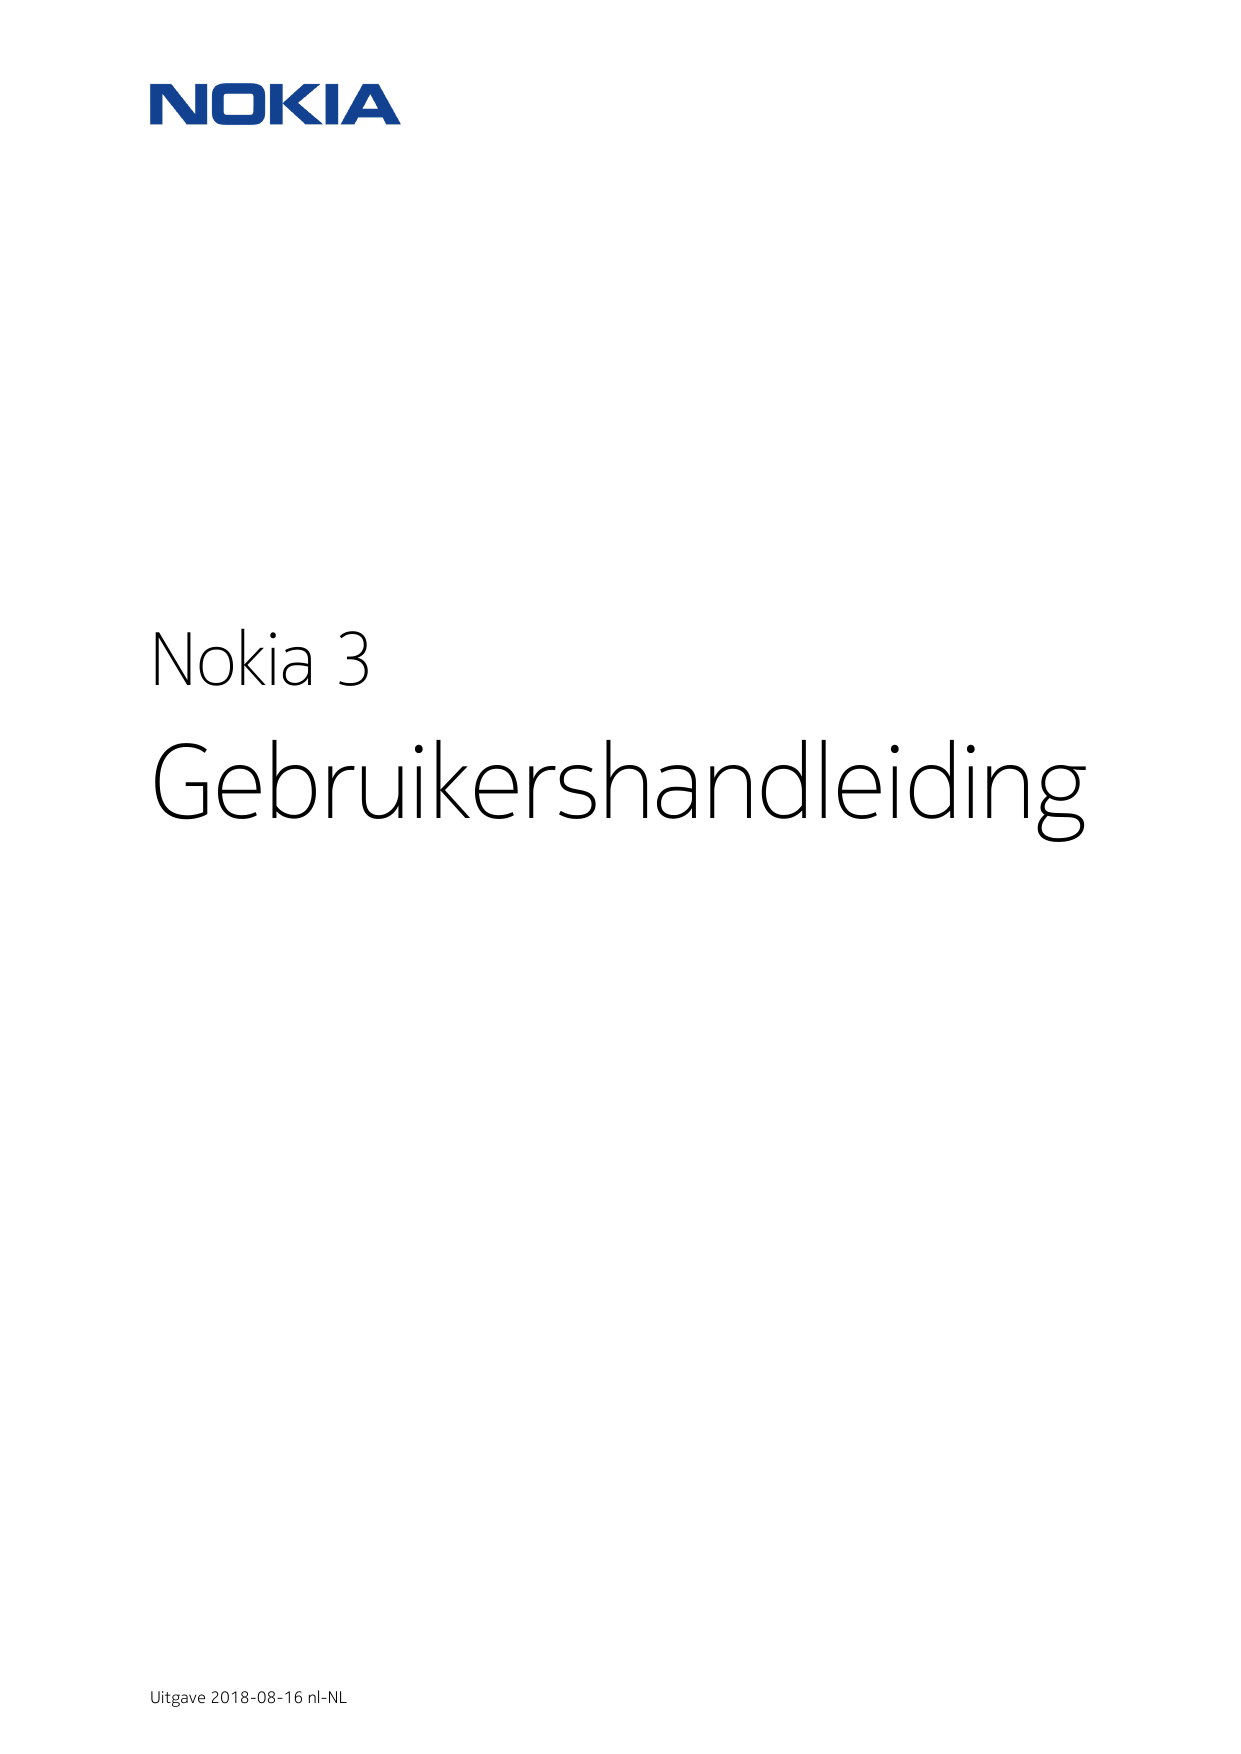 Nokia 3GebruikershandleidingUitgave 2018-08-16 nl-NL